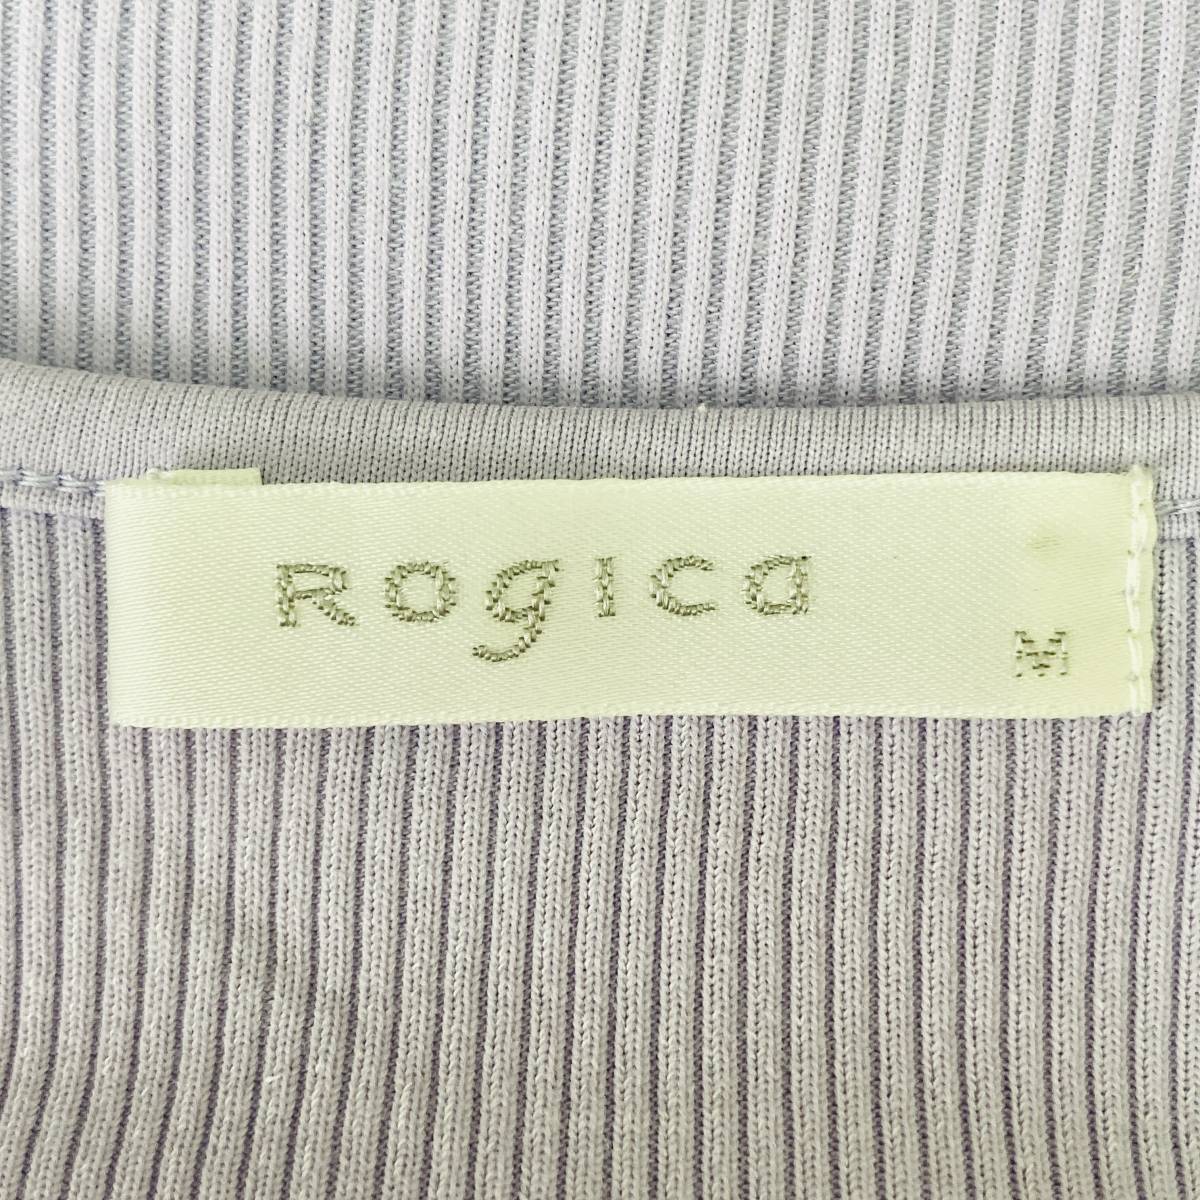 a01858 美品 Rogica ロジカ レディース 半袖カットソー 薄手 丸首 日本製 M 紫 綿混 ナチュラル 上質 上品 フェミニンフローラルスタイル_画像8